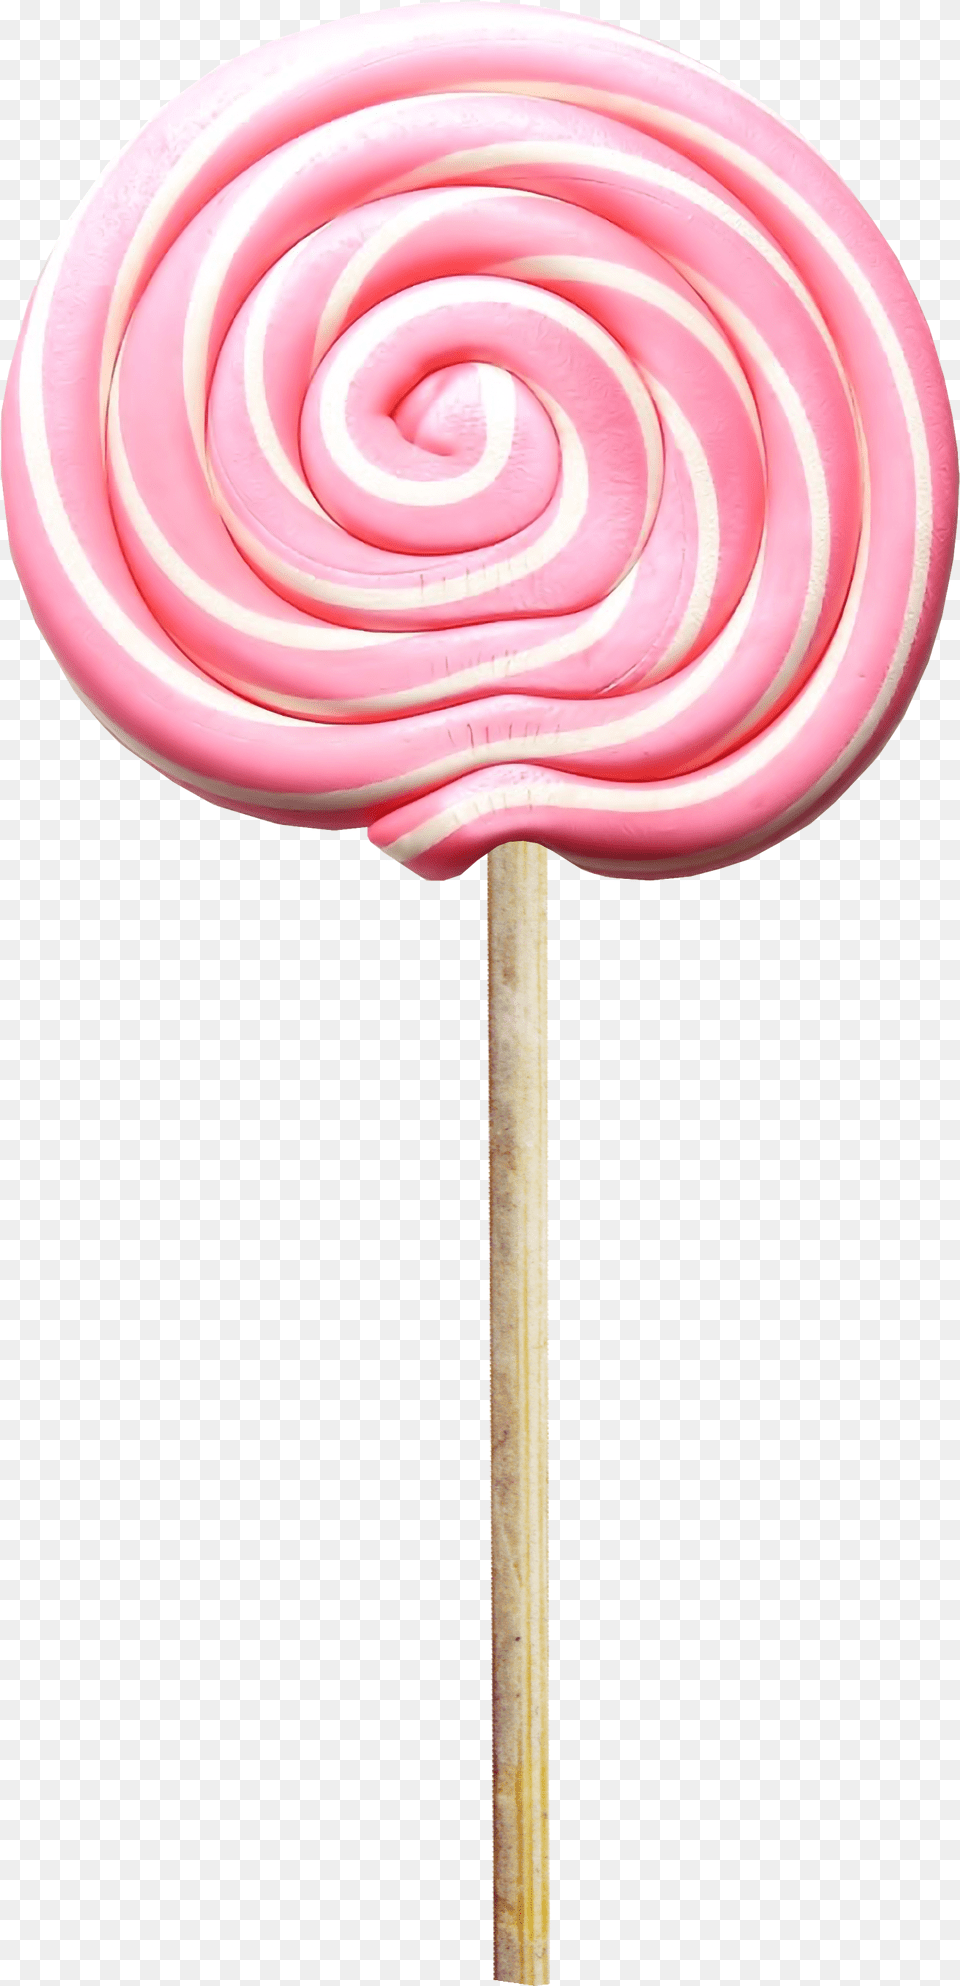 Download Hd Transparent Lollipop Pink Lollipop Pink, Candy, Food, Sweets Png